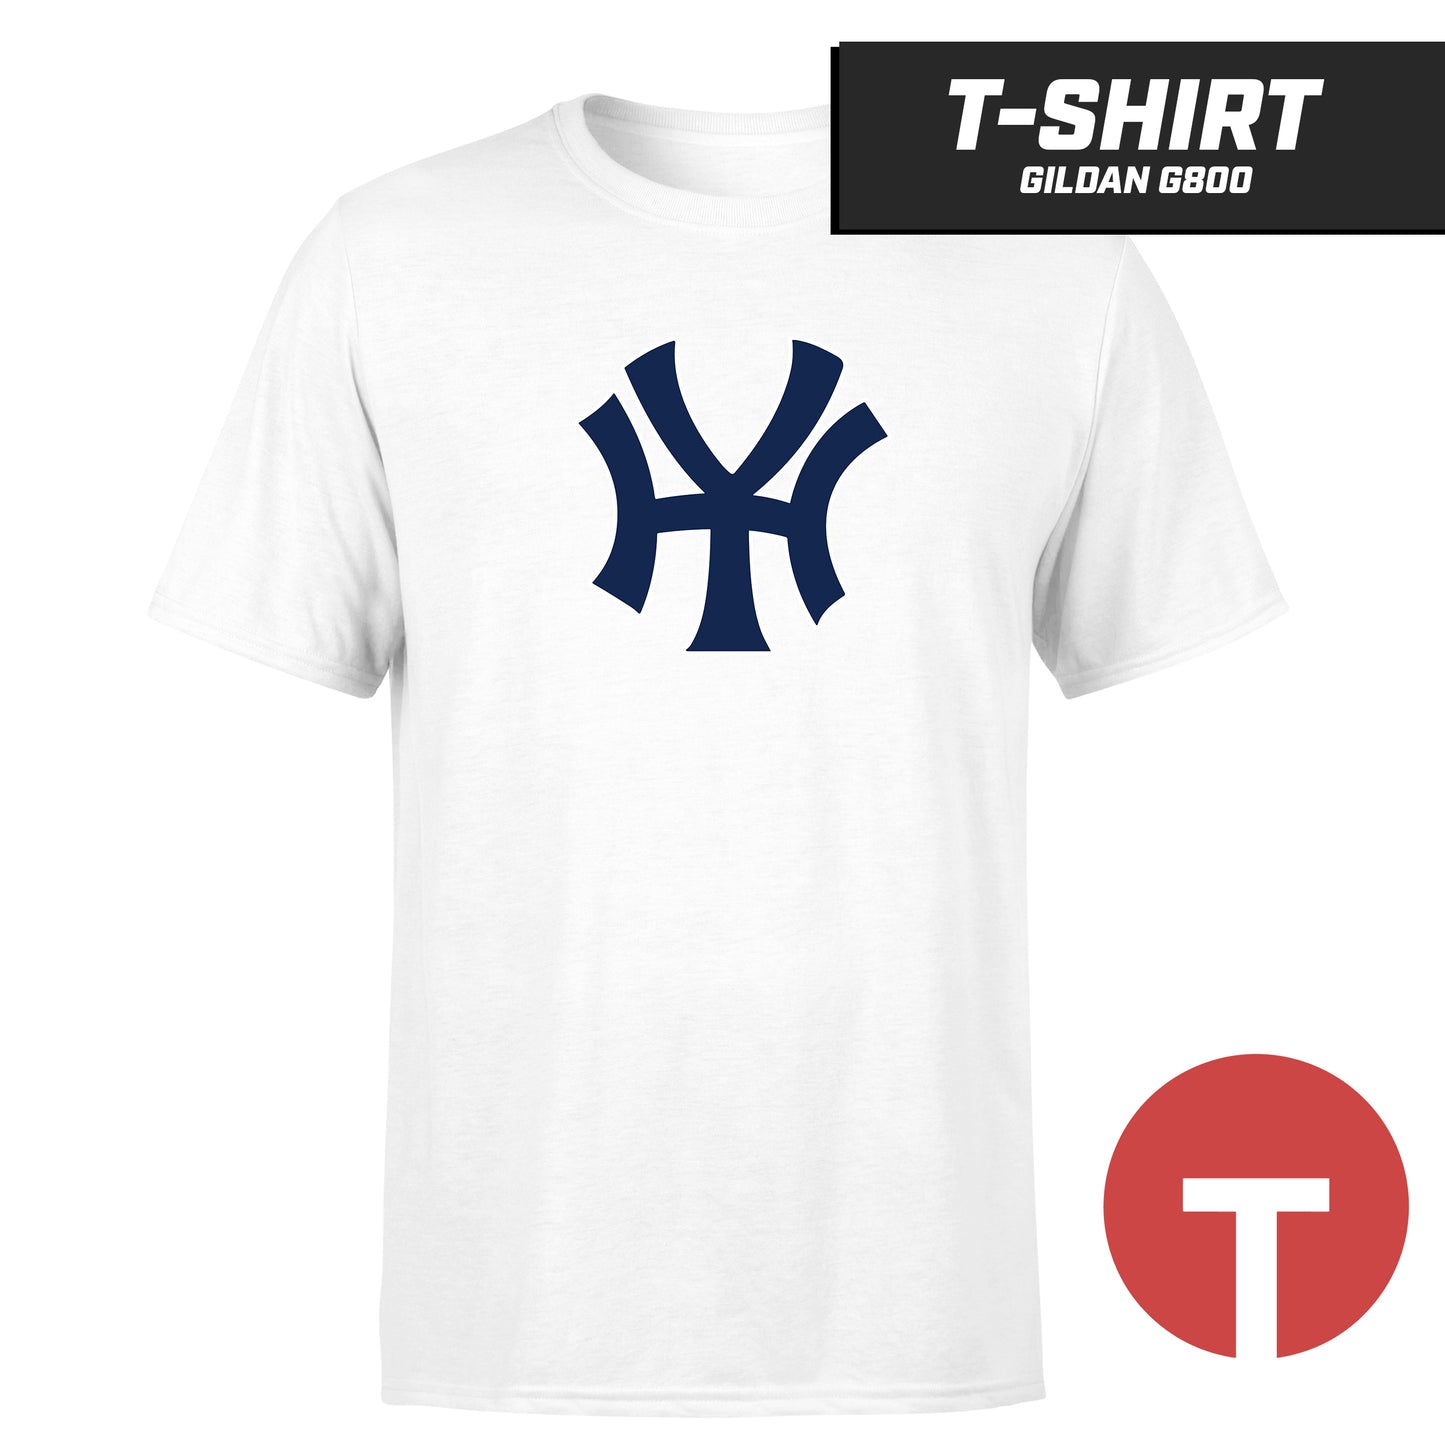 Hammond Yankees - T-Shirt Gildan G800